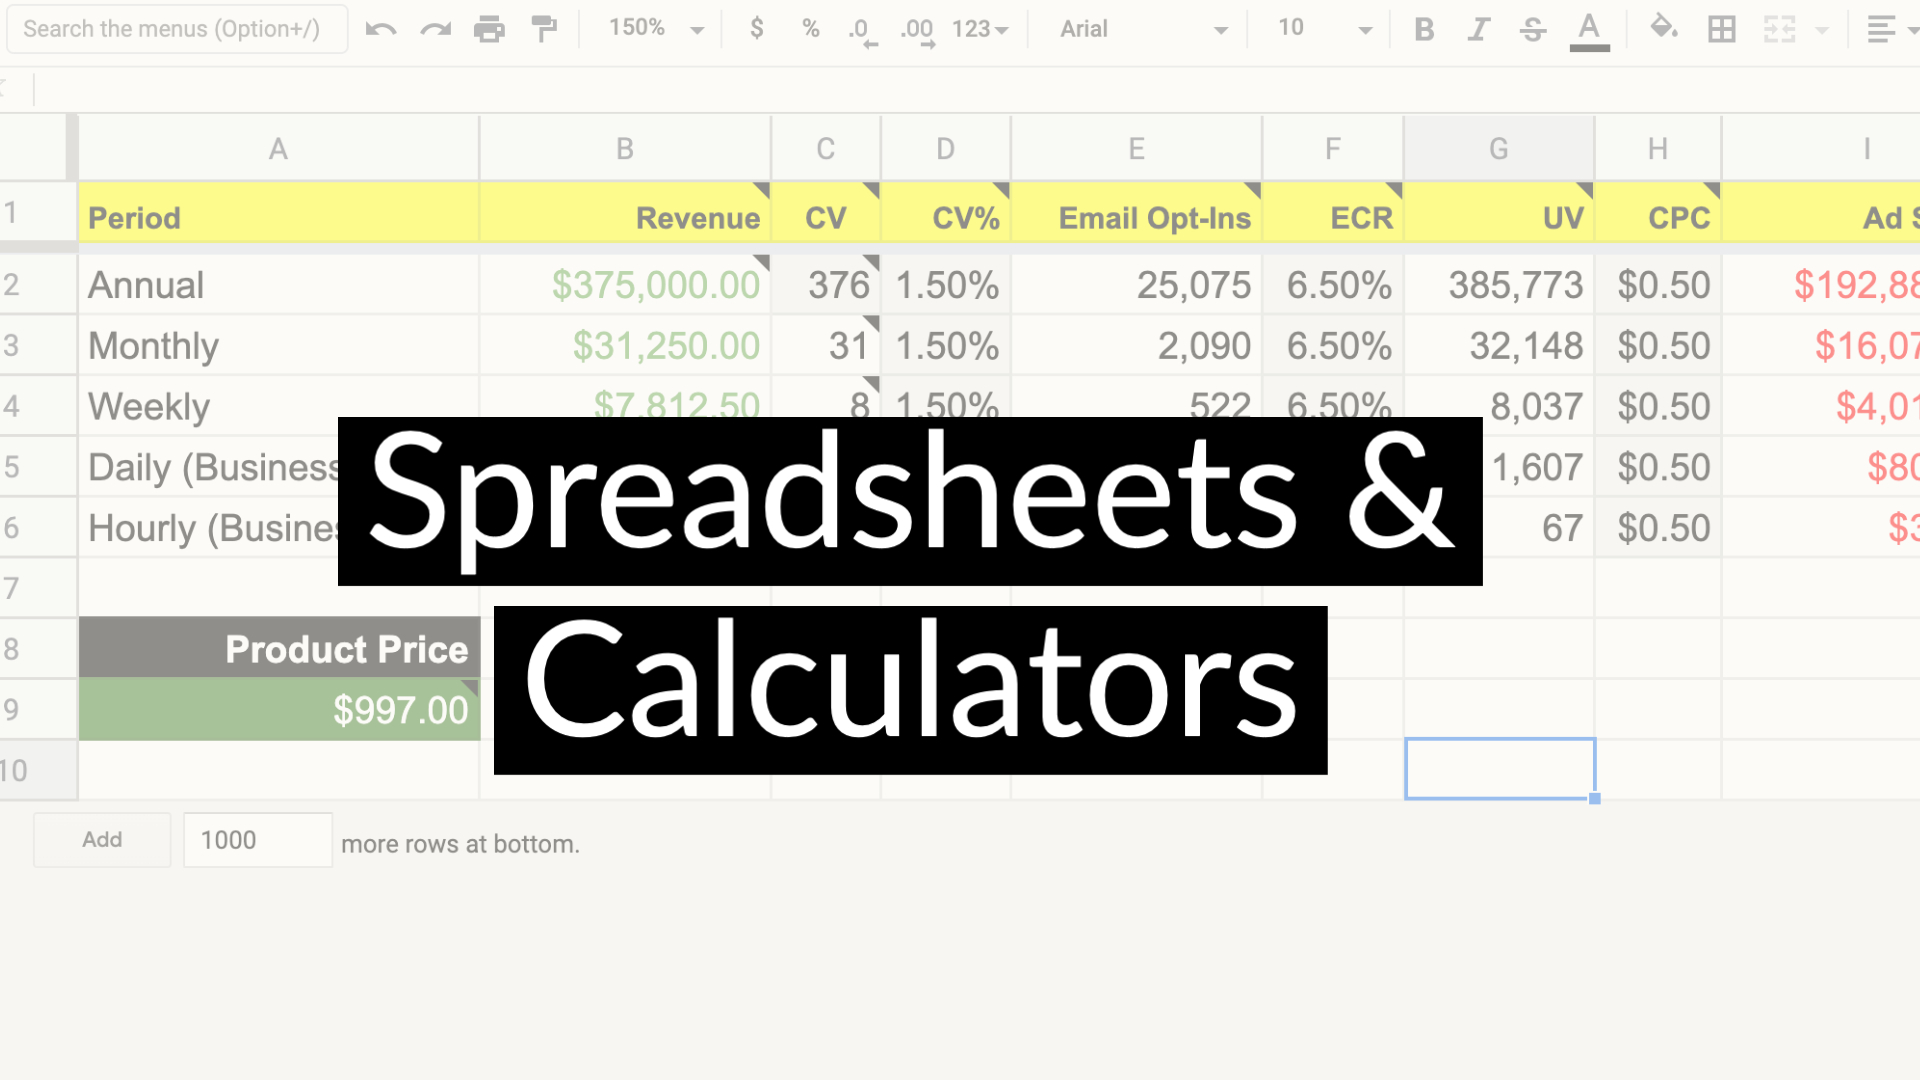 Spreadsheets_Calculators